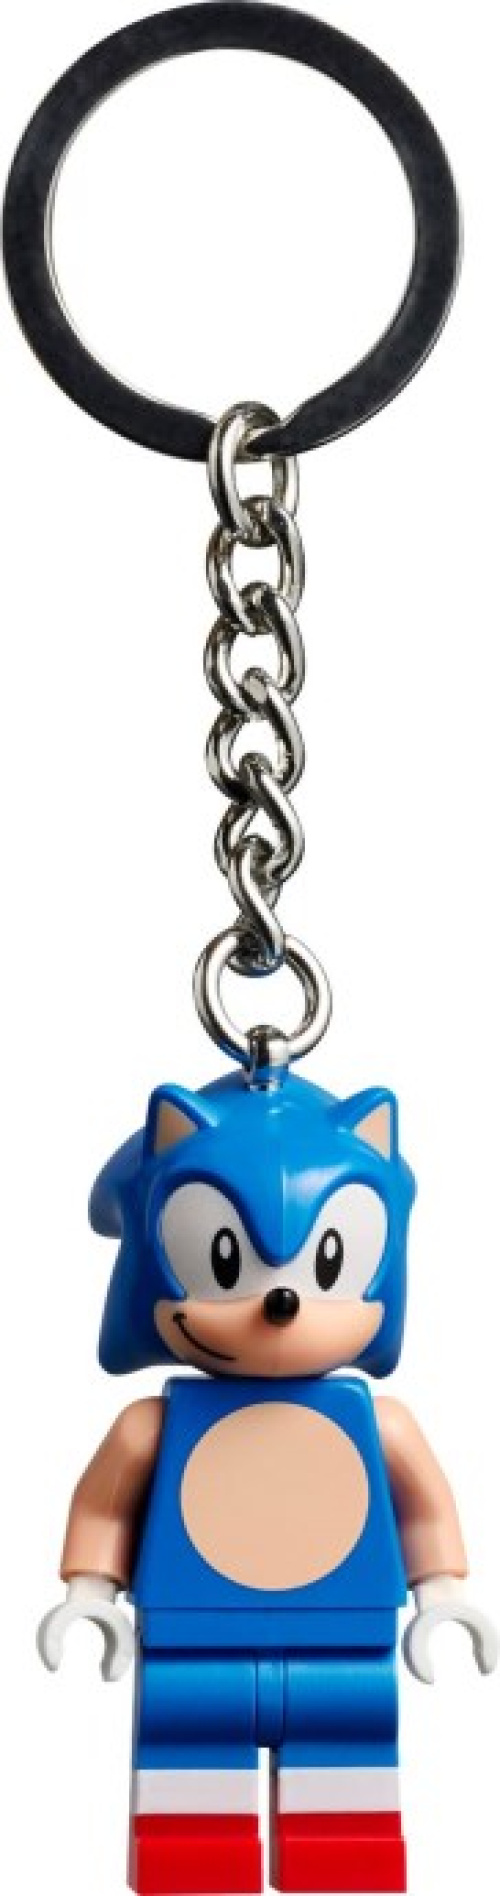 854239-1 Sonic the Hedgehog Key Chain